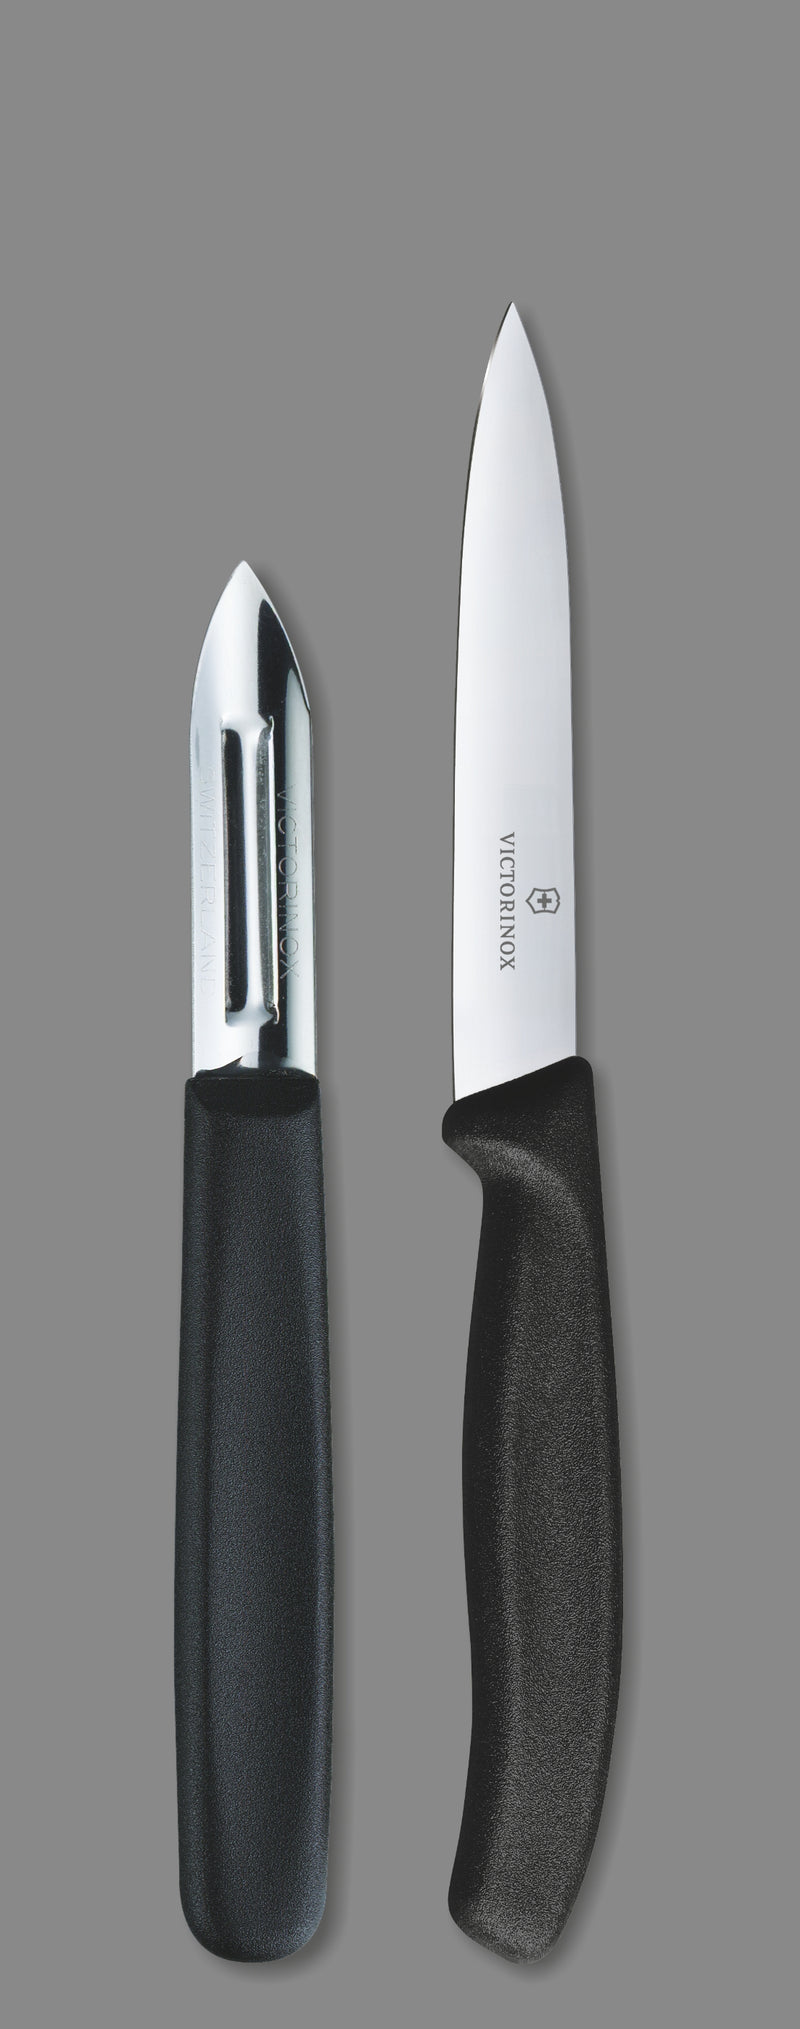 Victorinox Swiss Classic Kitchen Knife Set of 2-Straight Edge Knife & Traditional Peeler, Black, Swiss made